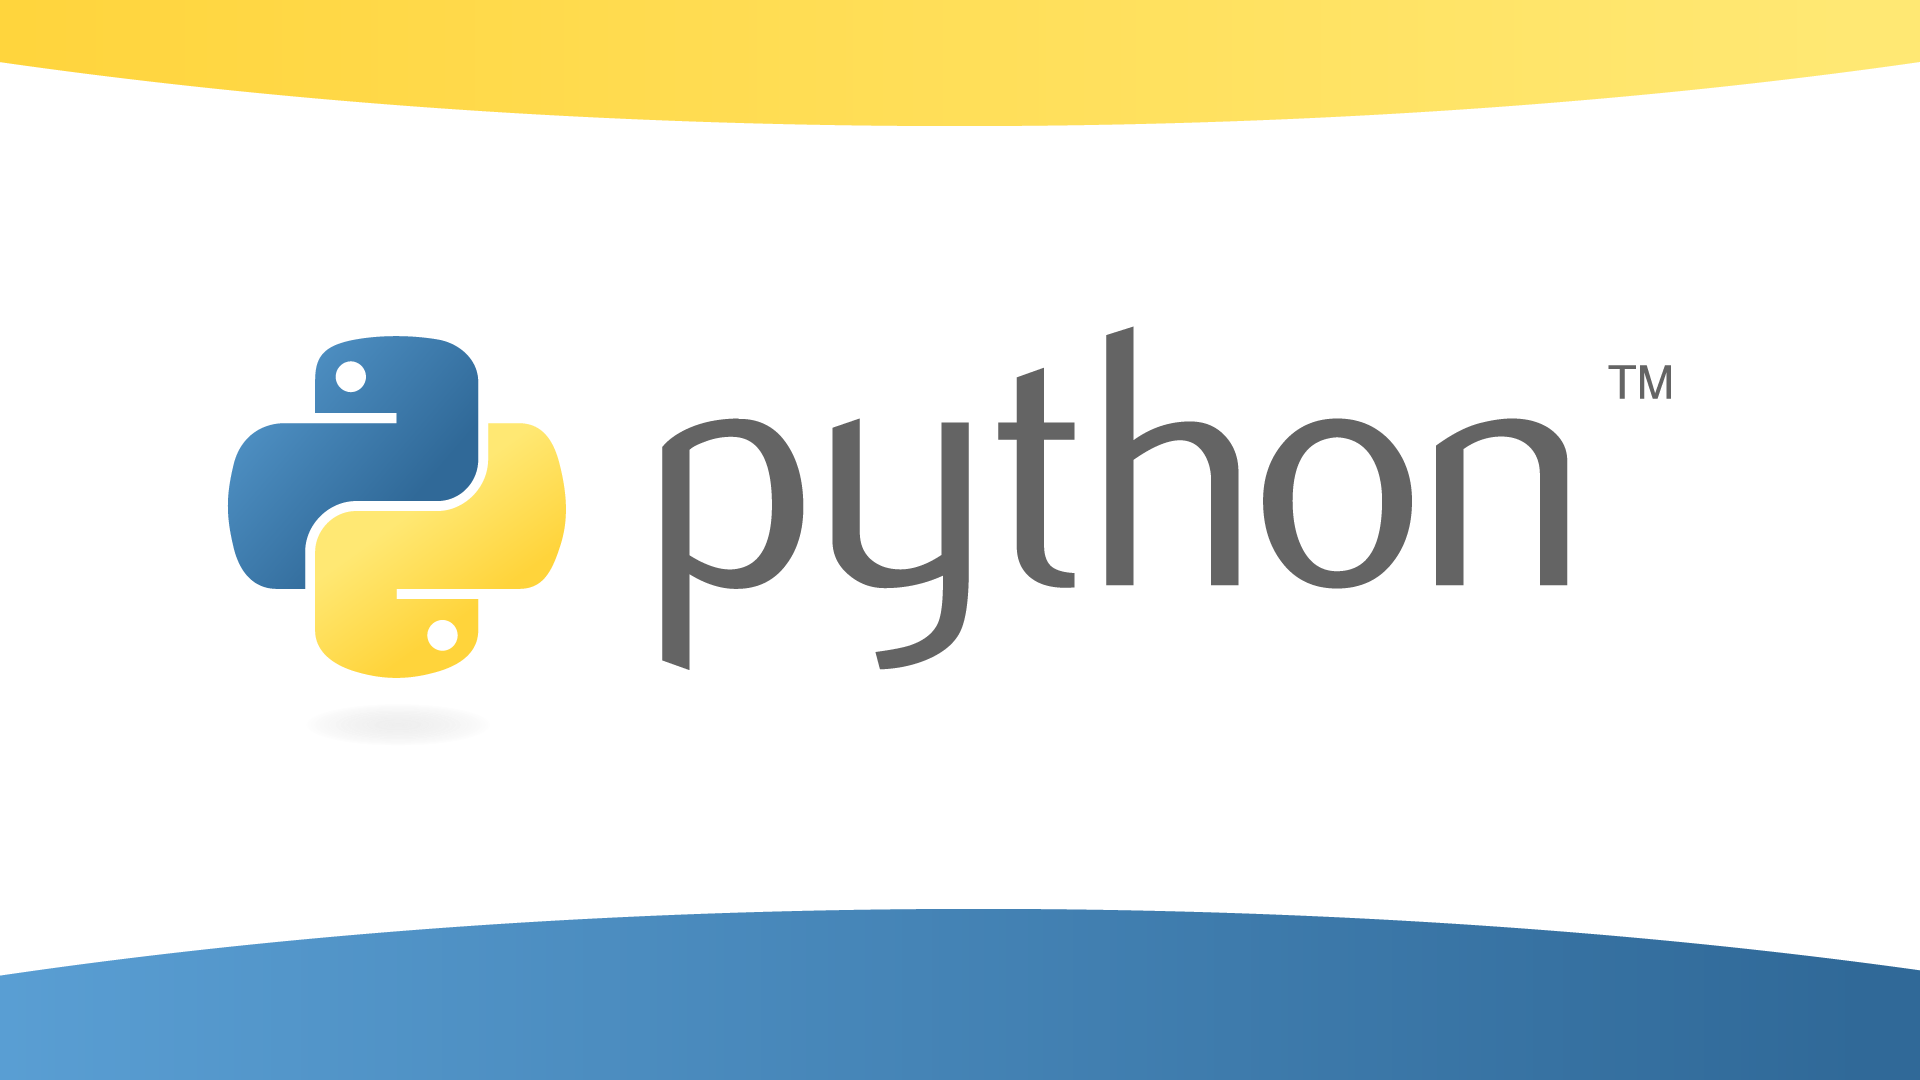 K 0 k python. Питон логотип. Фон для презентации Python. Python 3. Python 3.0.